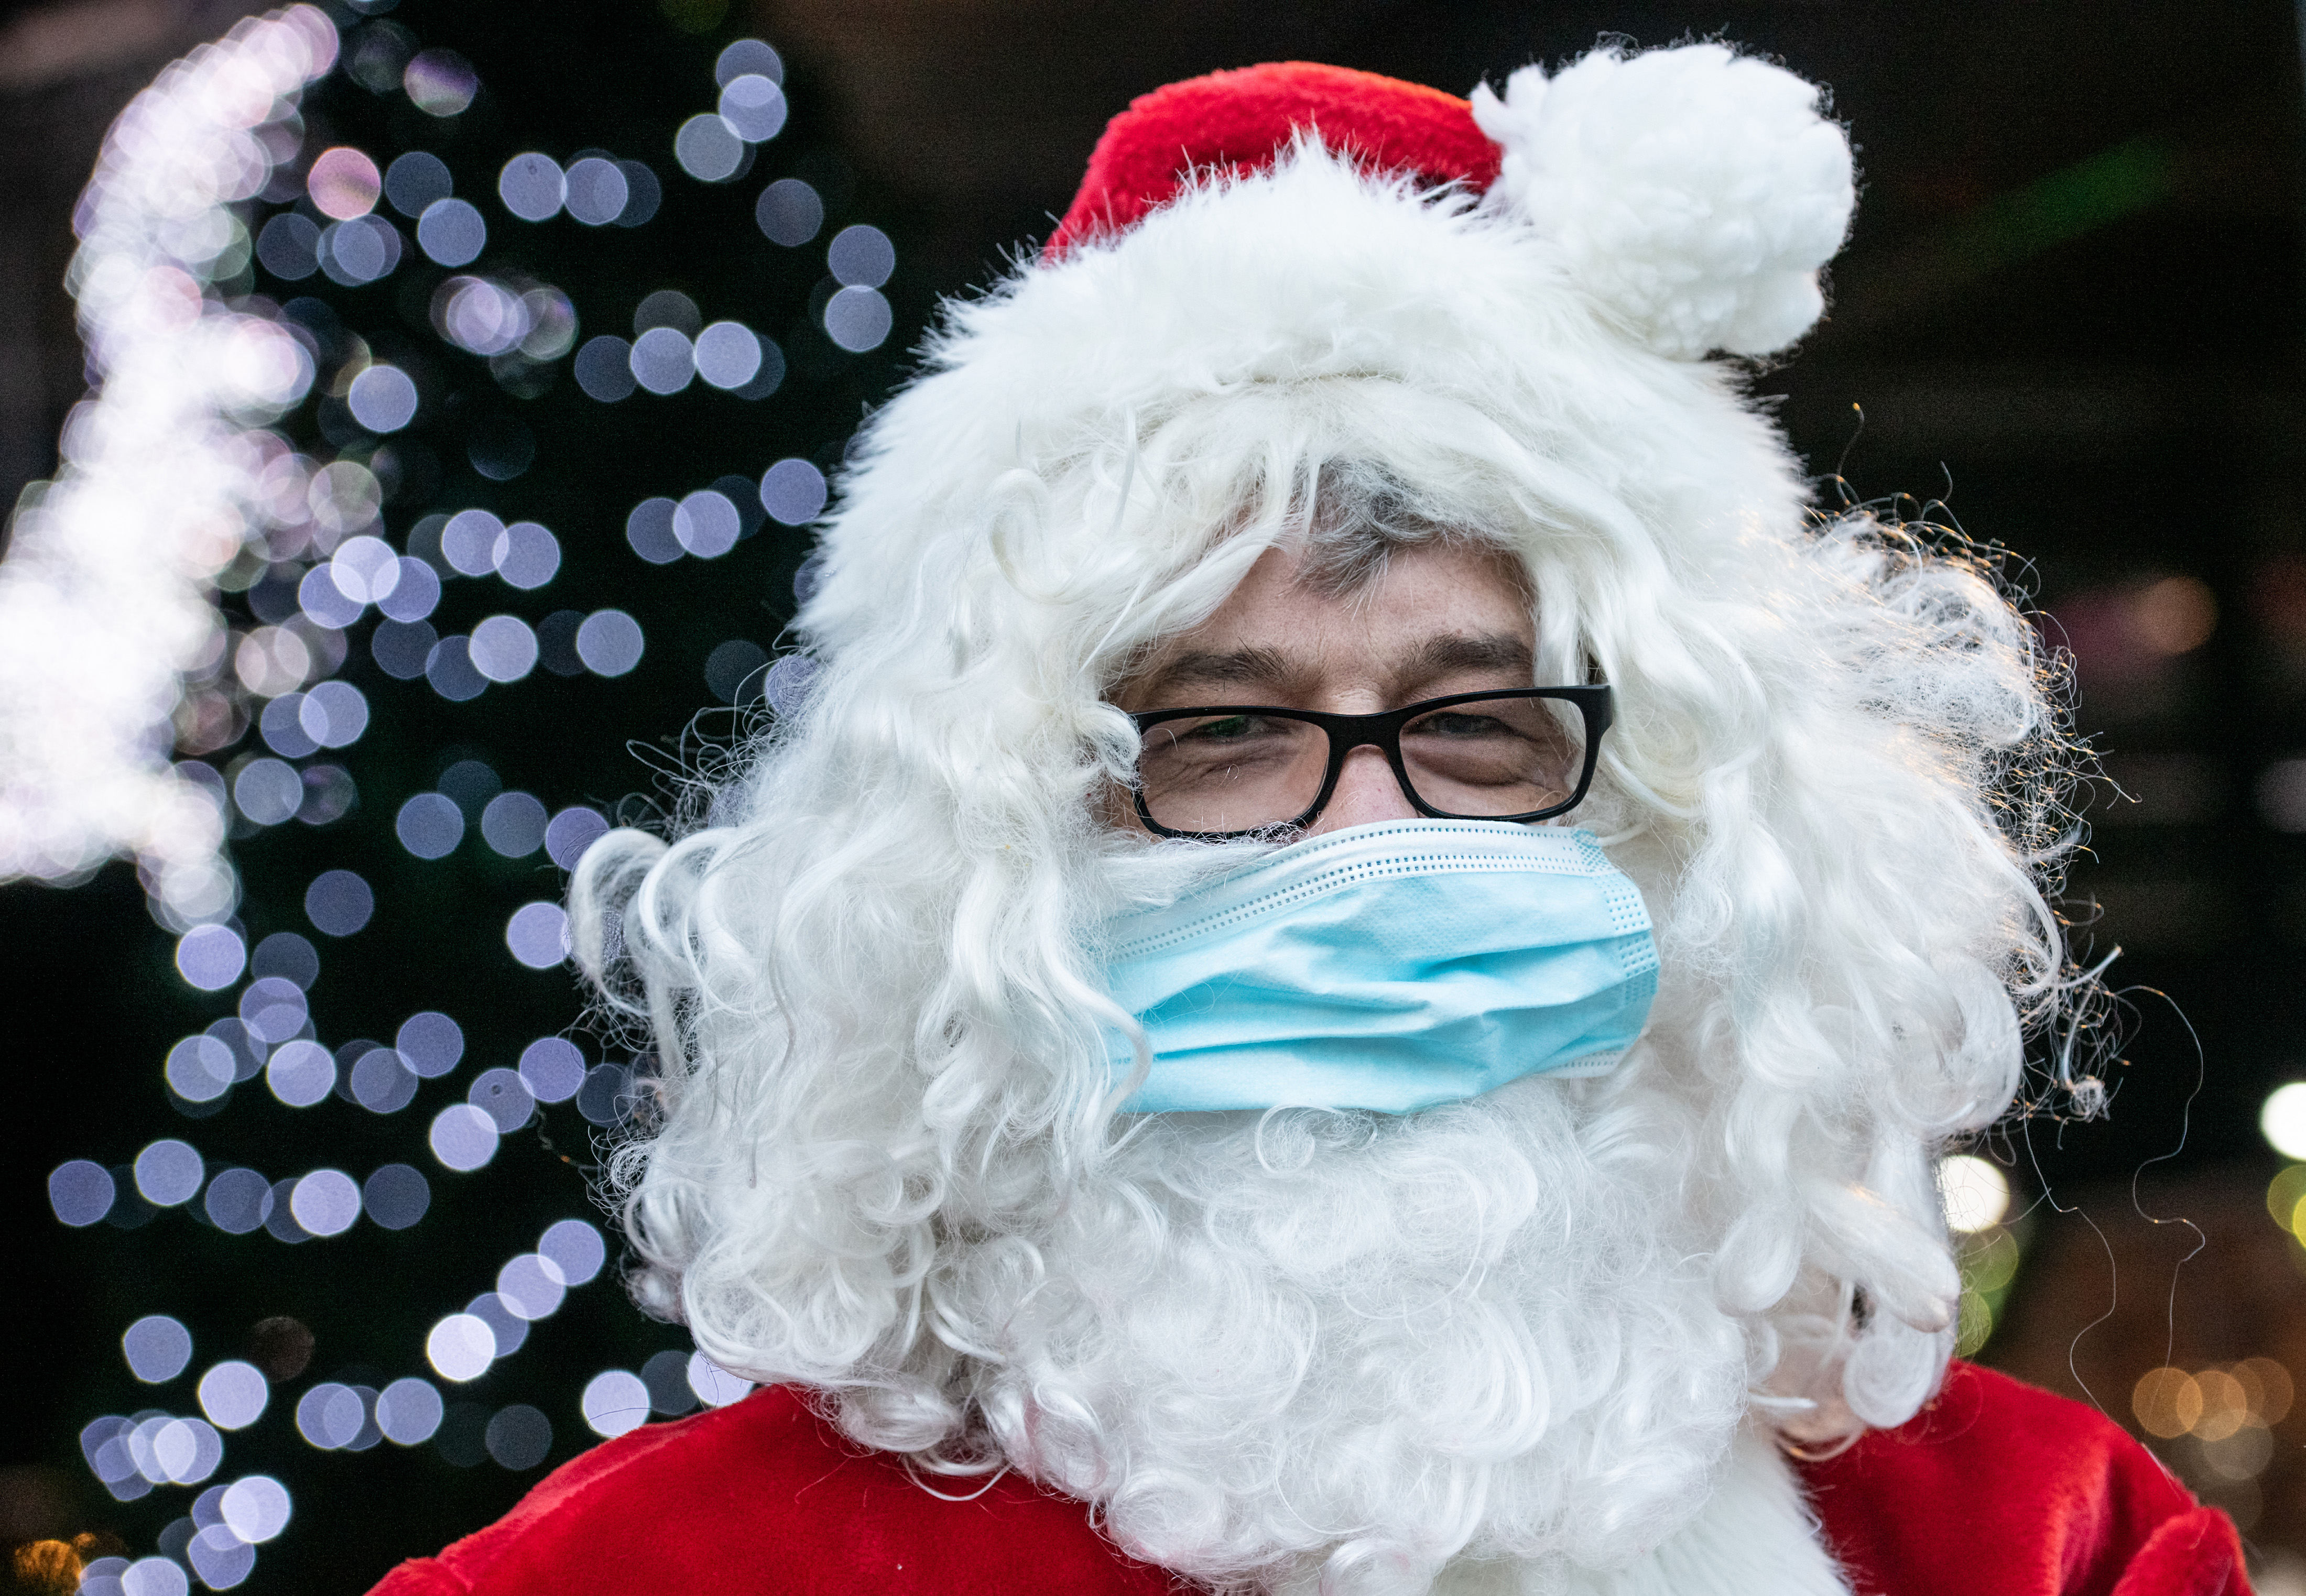 Betrunkene Frau in Santa Claus Kostüm mit alkohol